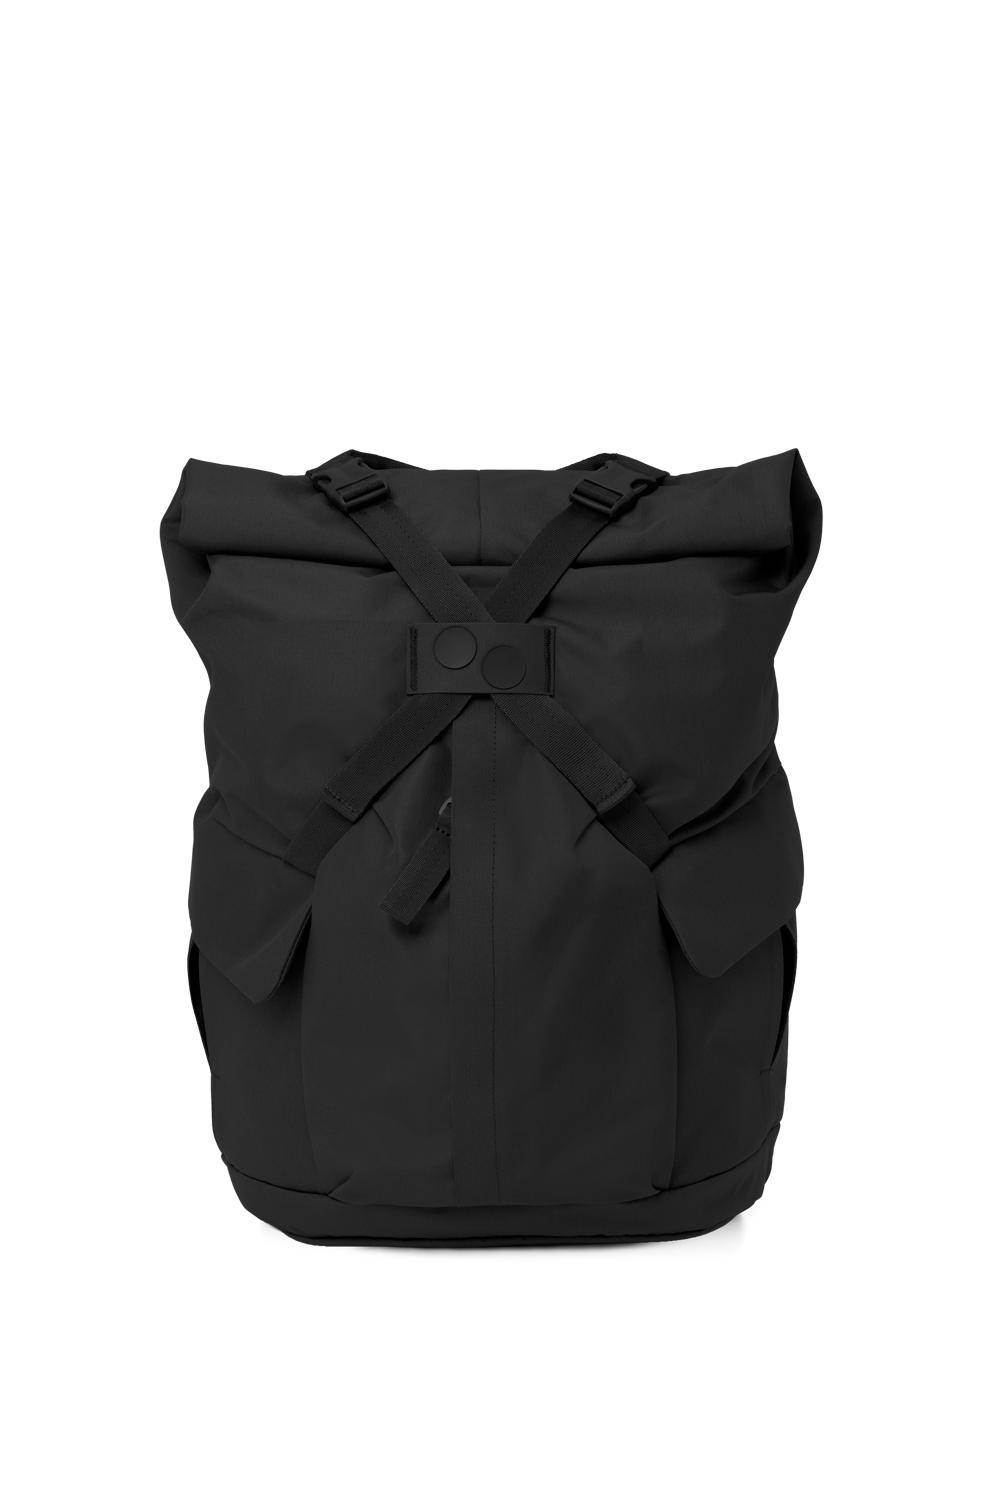 Kross Backpack Solid Black